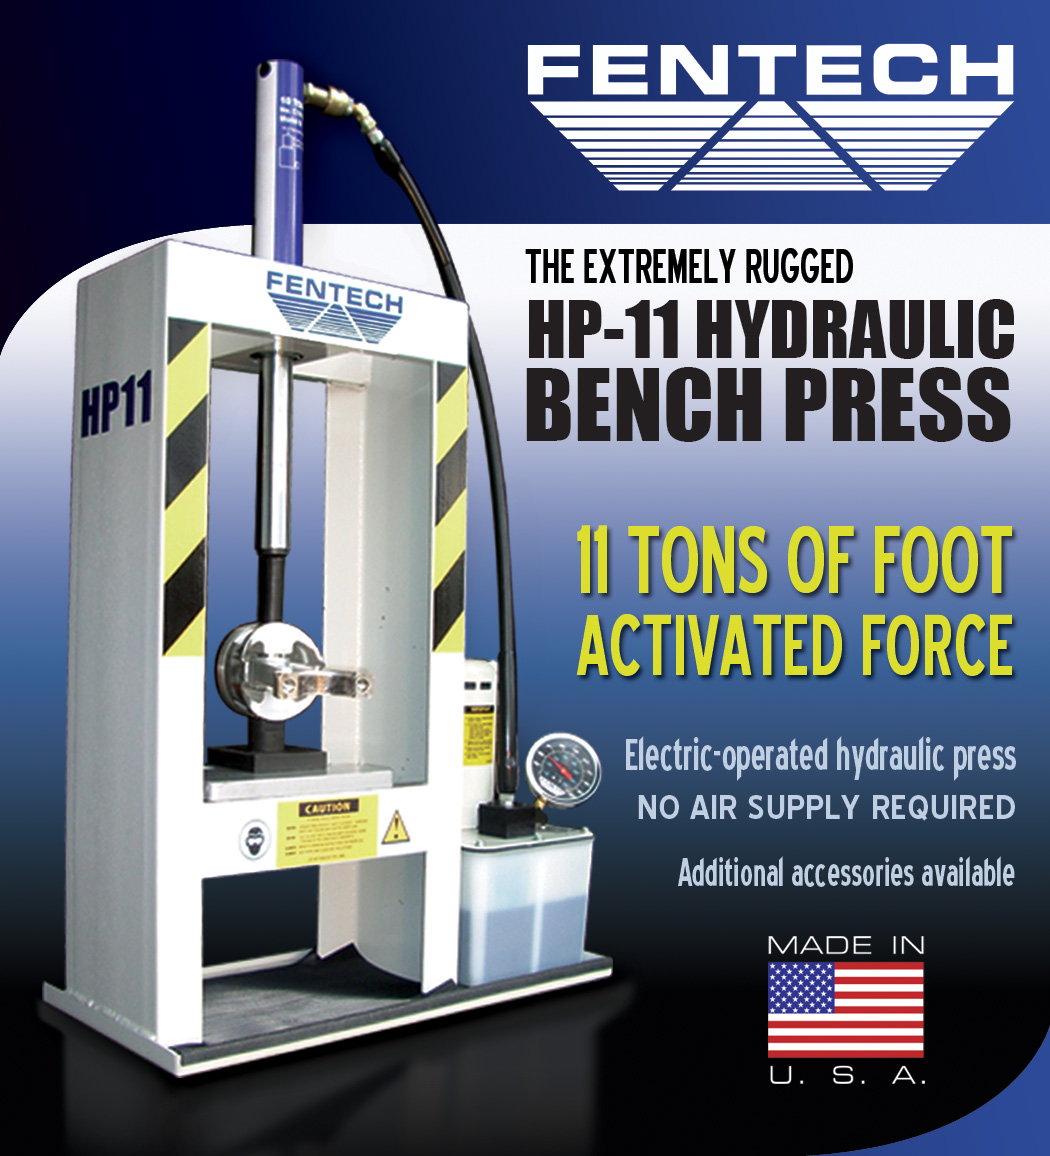 Fentech HP-11 hydraulic bench press